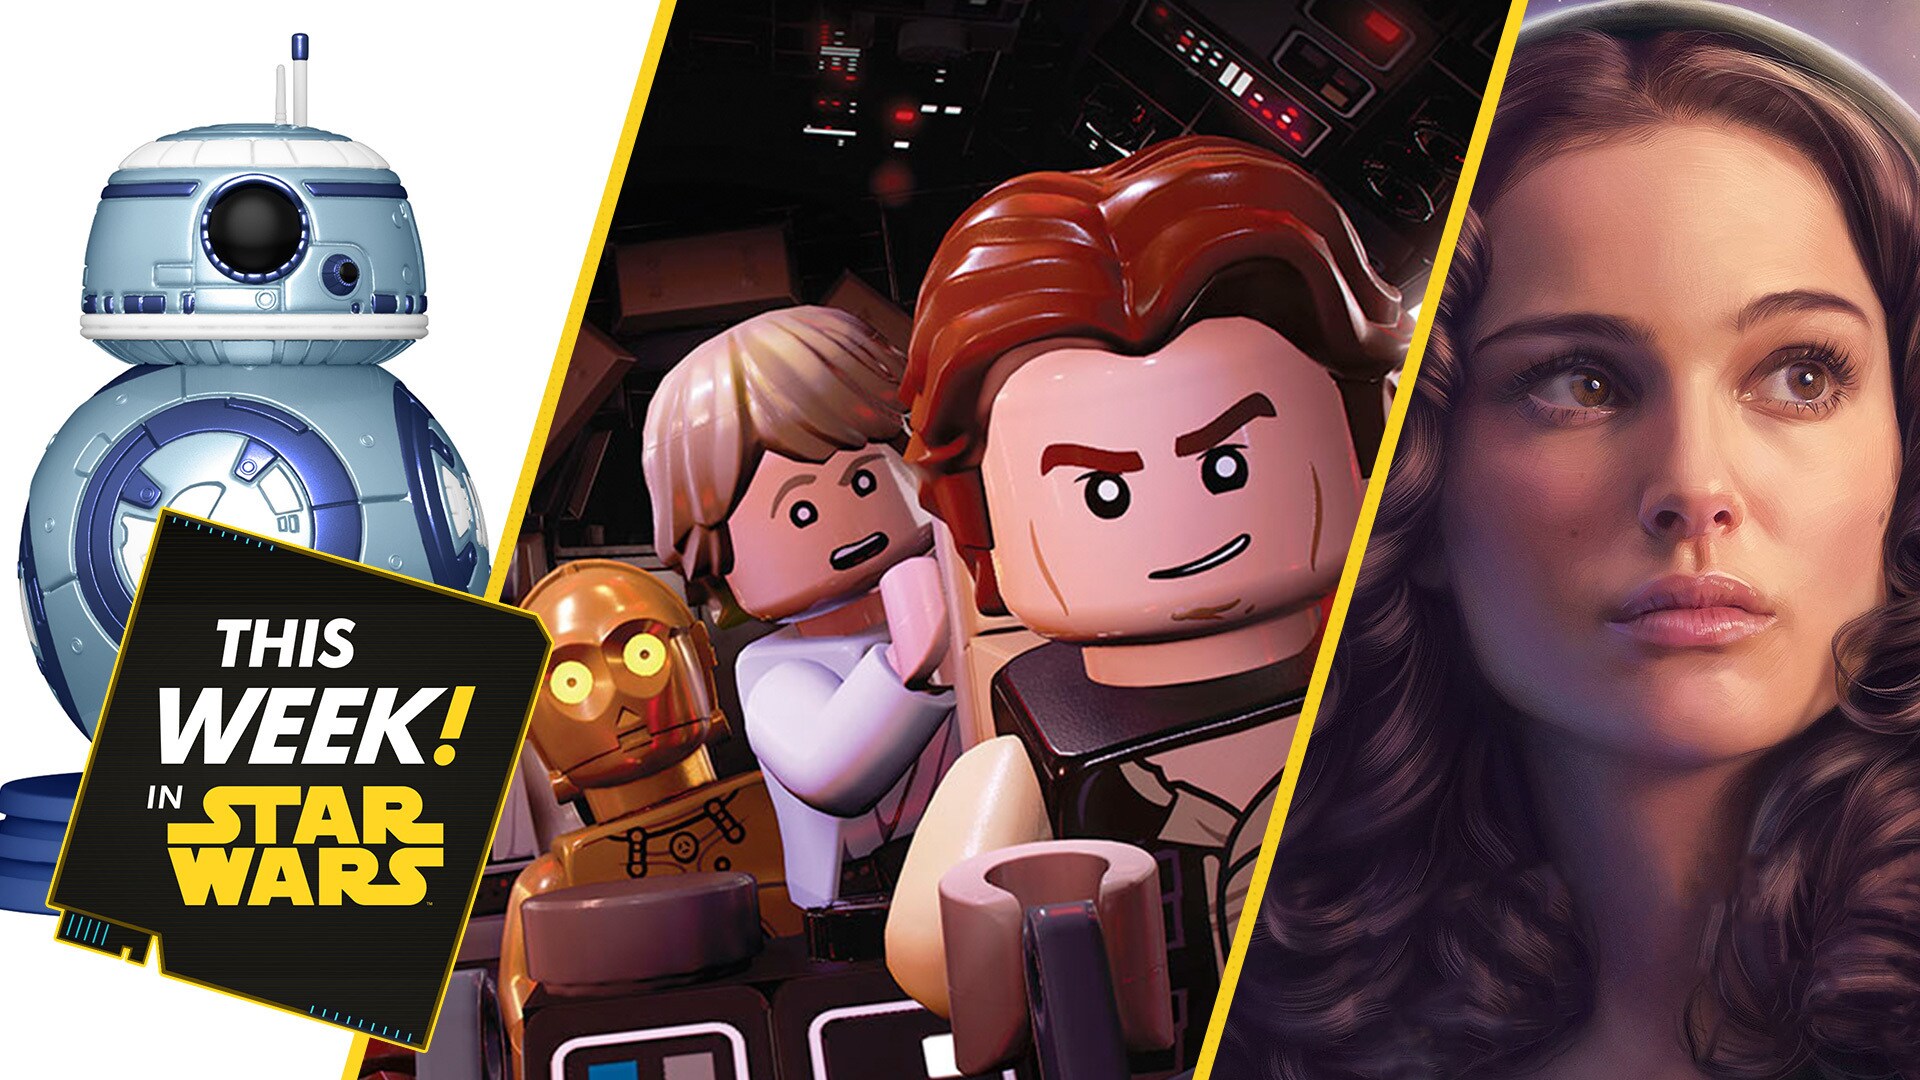 Star-studded Celebration Panel, LEGO Star Wars: The Skywalker Saga is Live, and More!